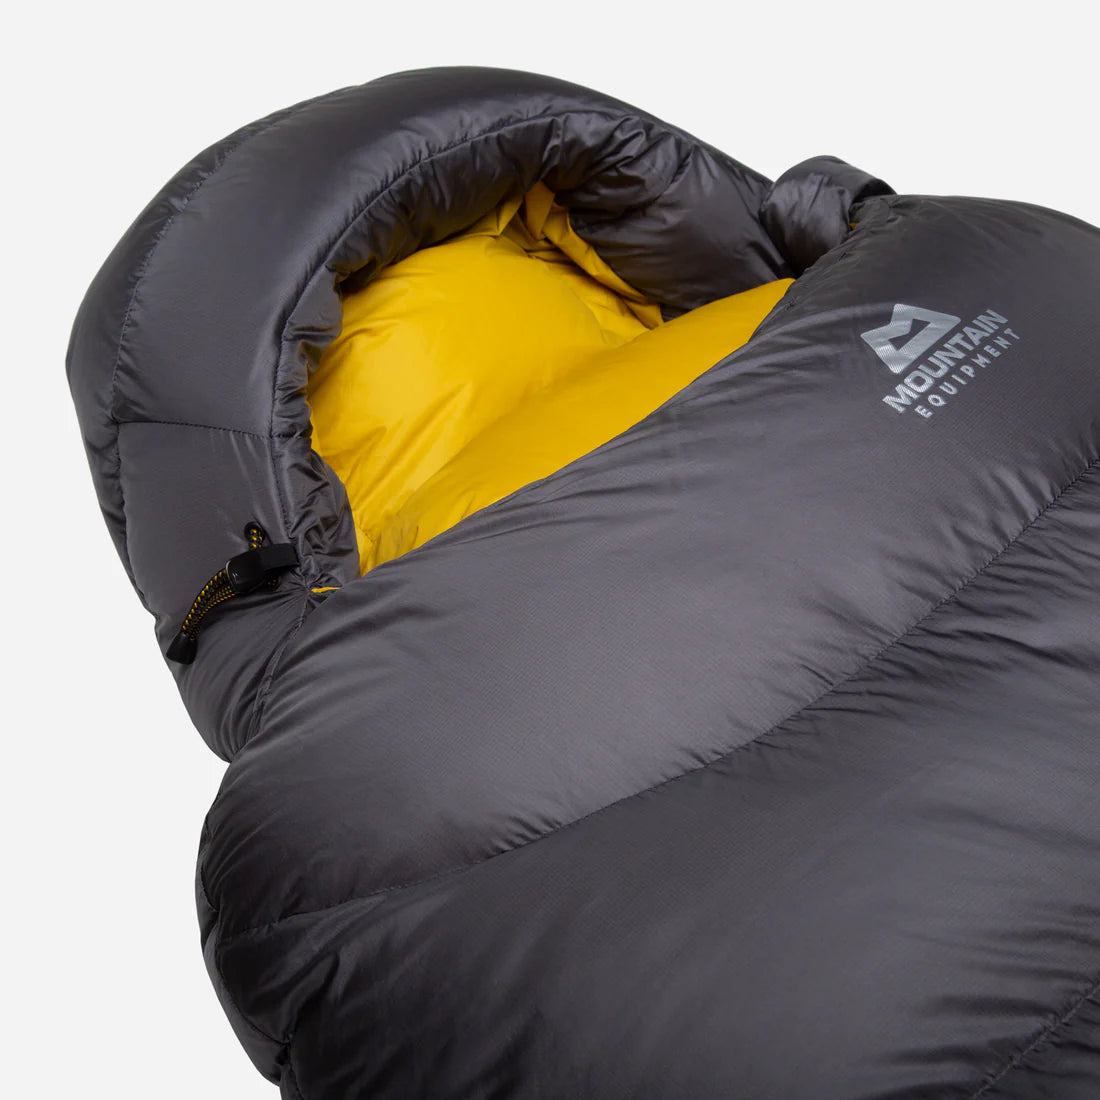 Mountain Equipment Helium GT 600 Down Sleeping Bag - Regular